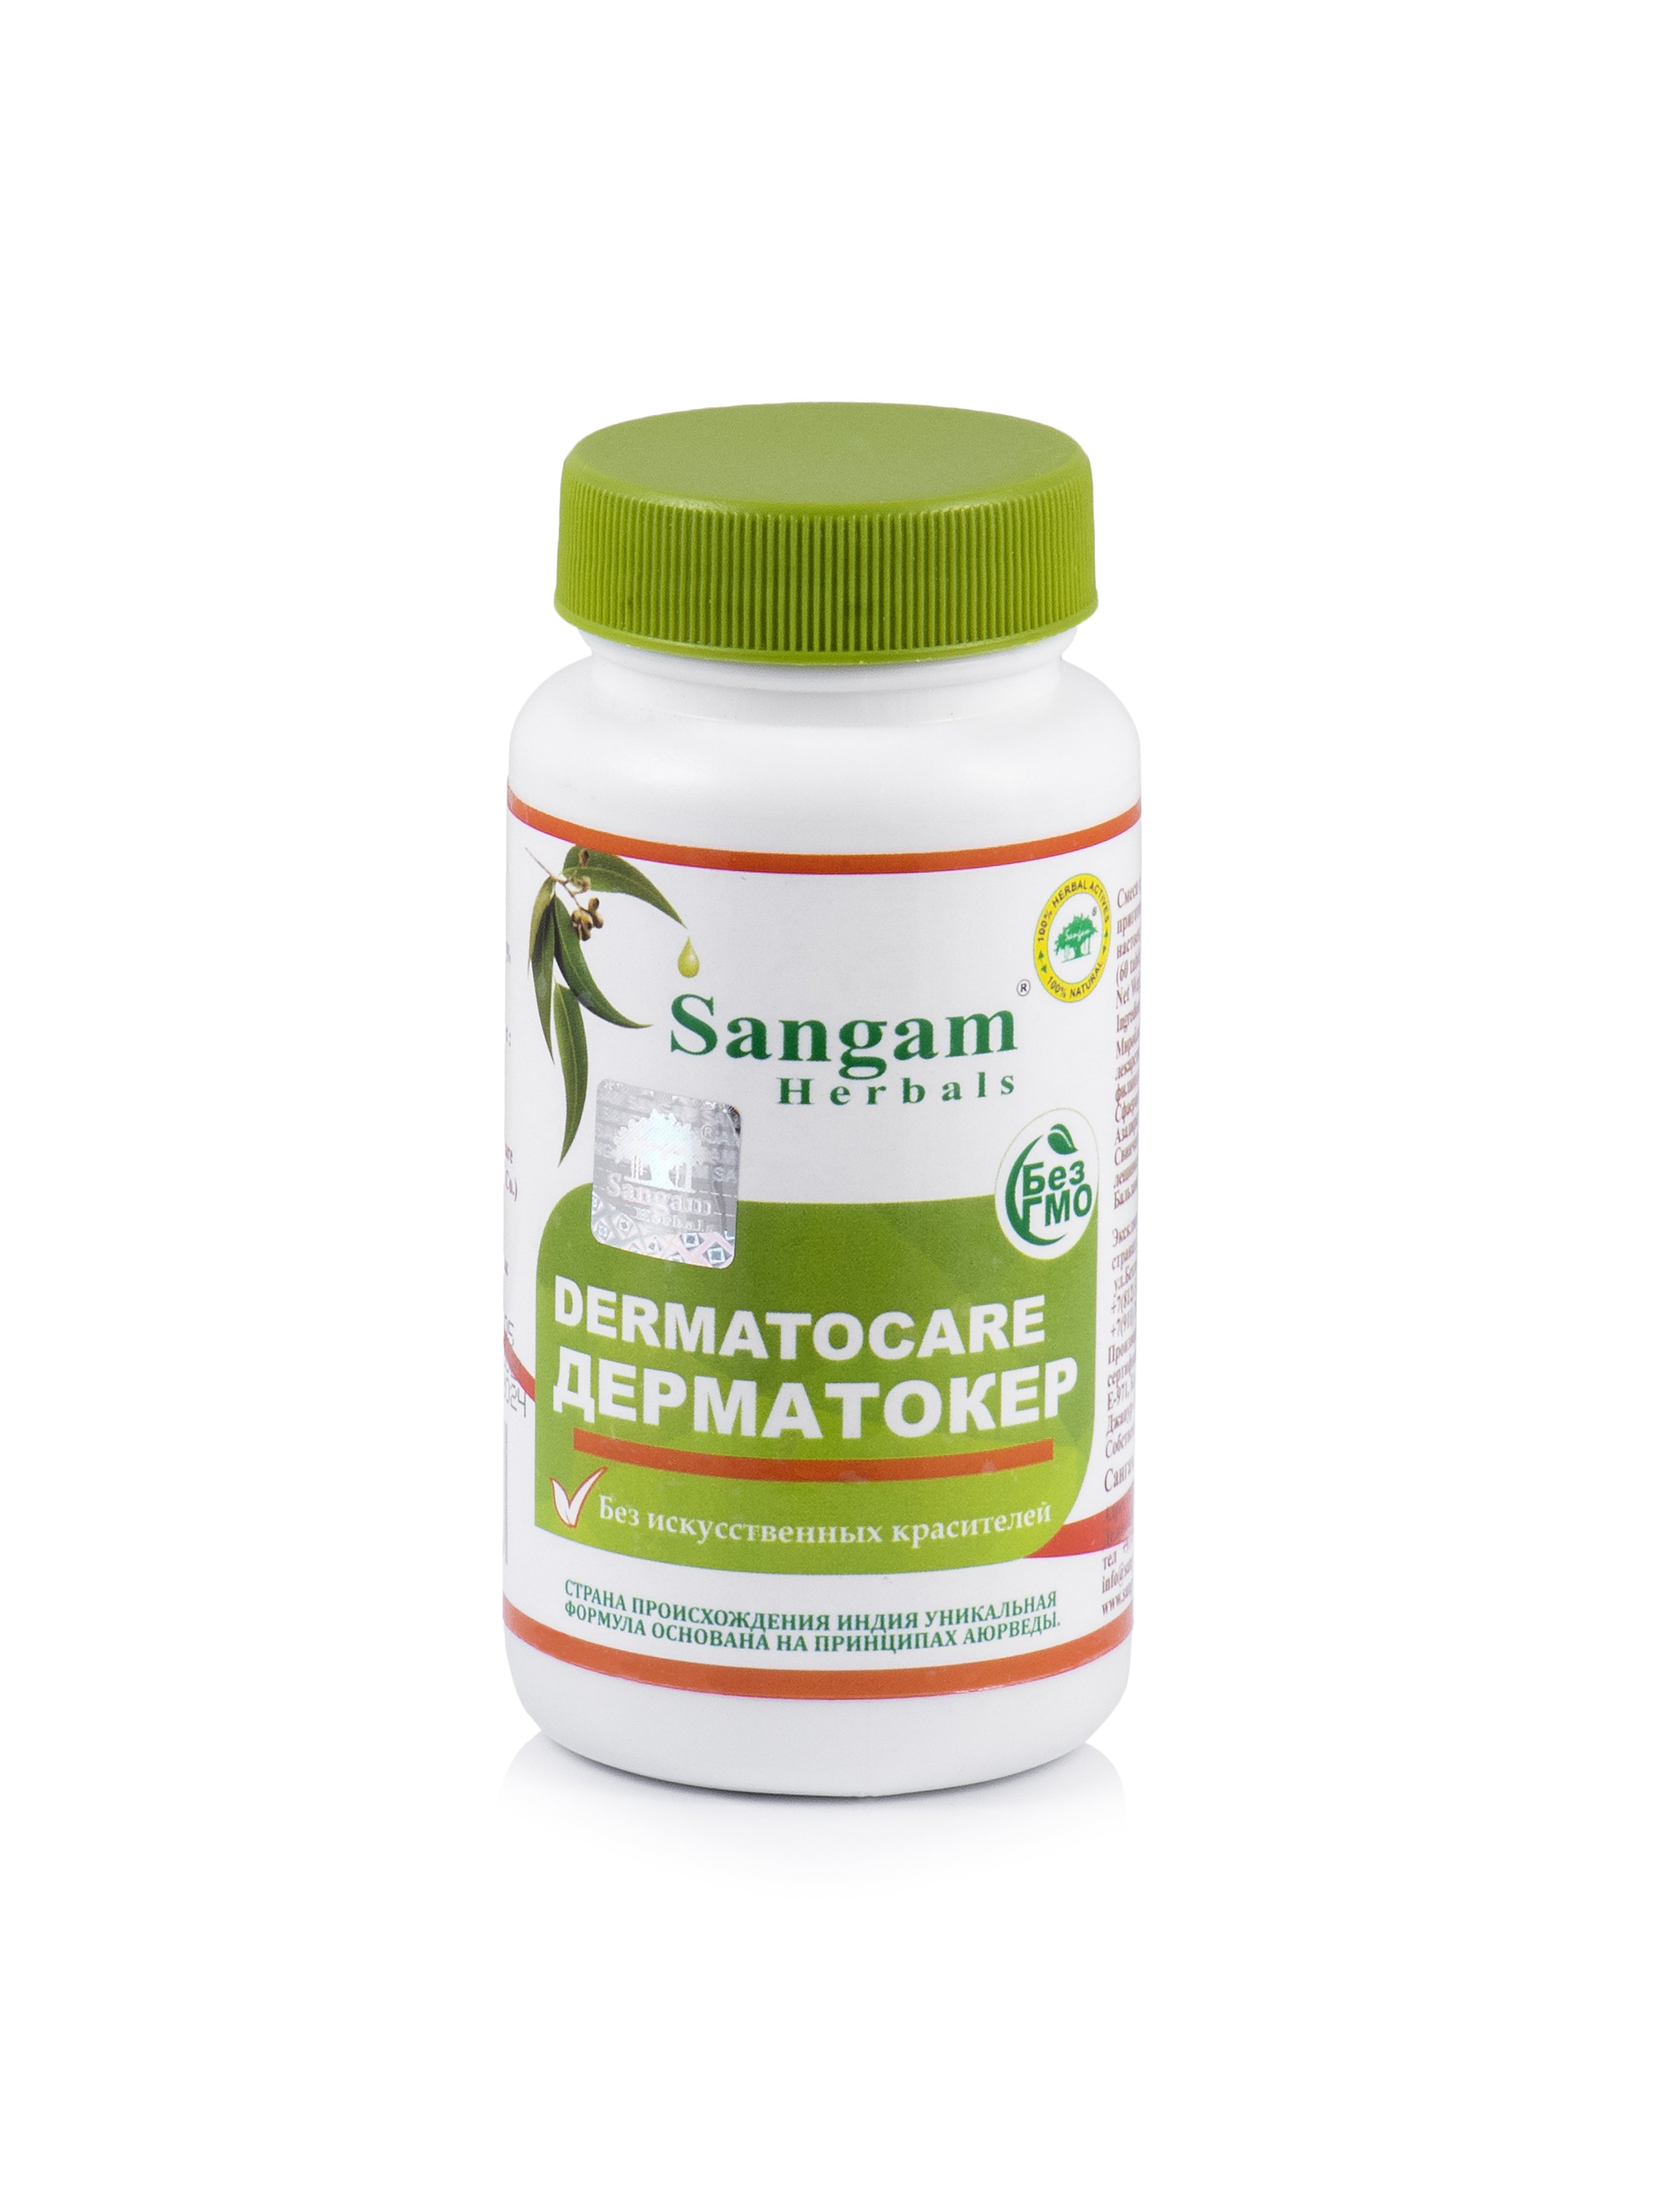 DERMATOCARE, Sangam Herbals (ДЕРМАТОКЕР, Сангам Хербалс), 60 таб. по 750 мг.